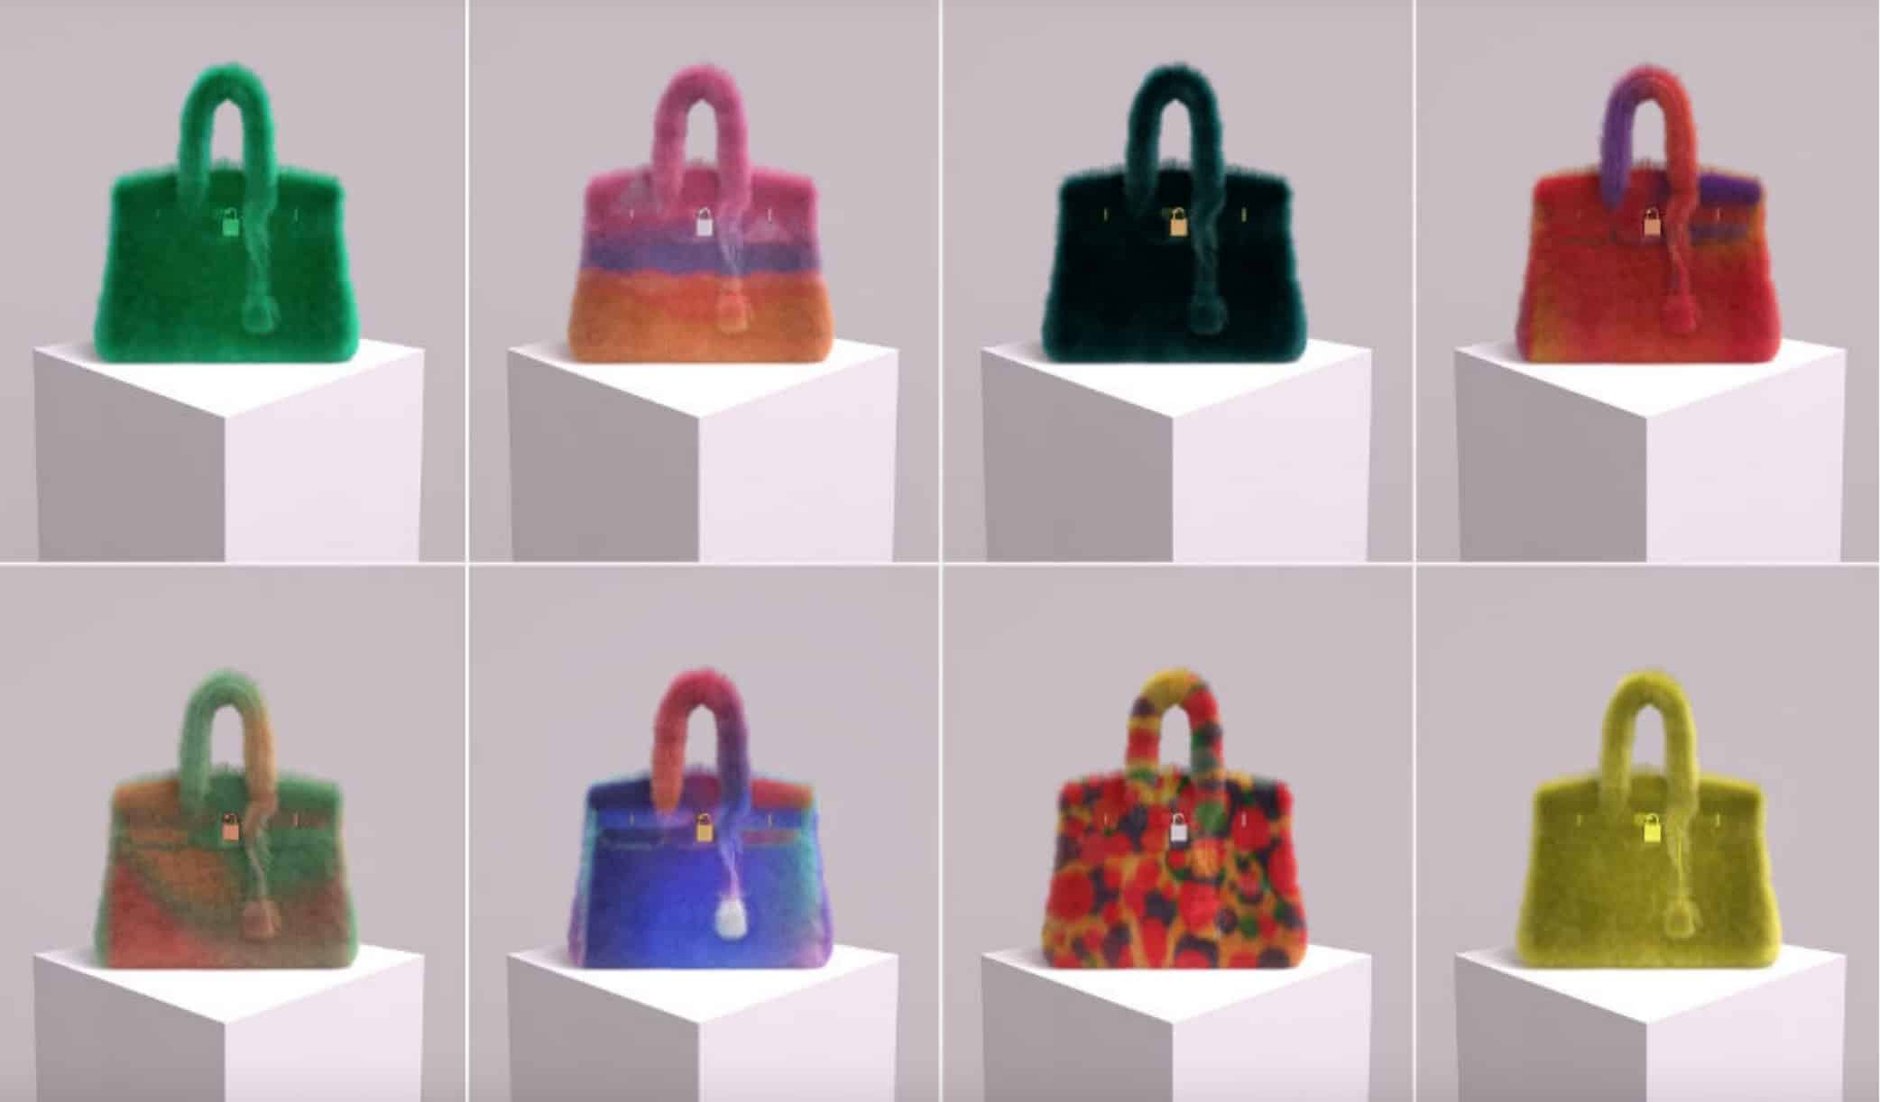 Virtual Birkin Bags on Trial in Hermès Case Testing IP Rights - WSJ